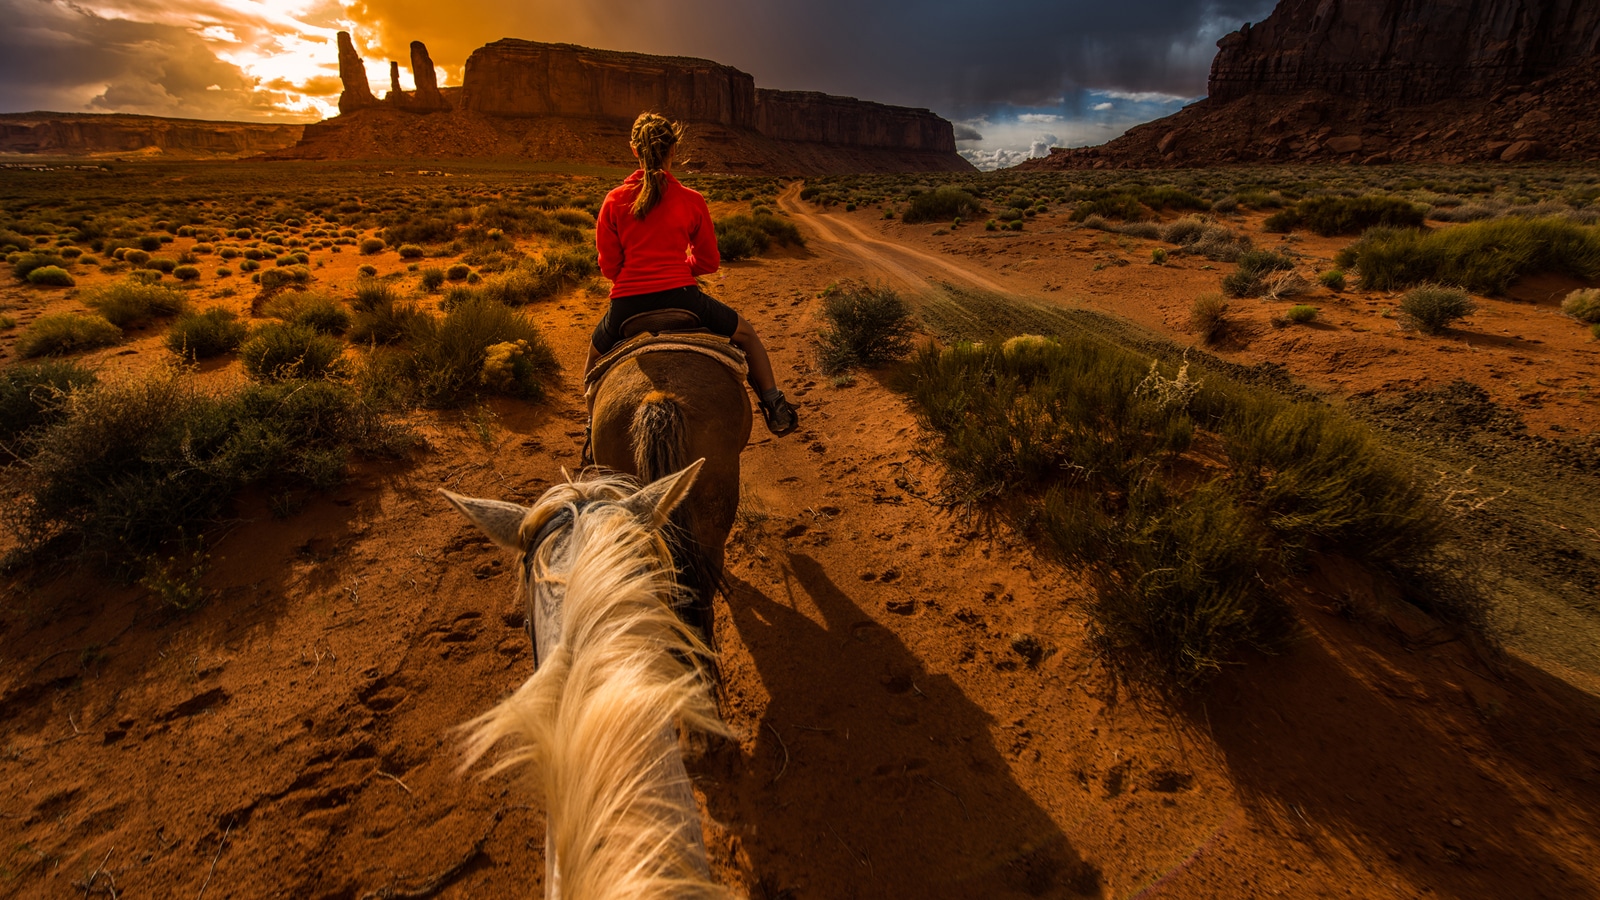 Best Date Ideas - Horseback Riding In The Sonoran Desert